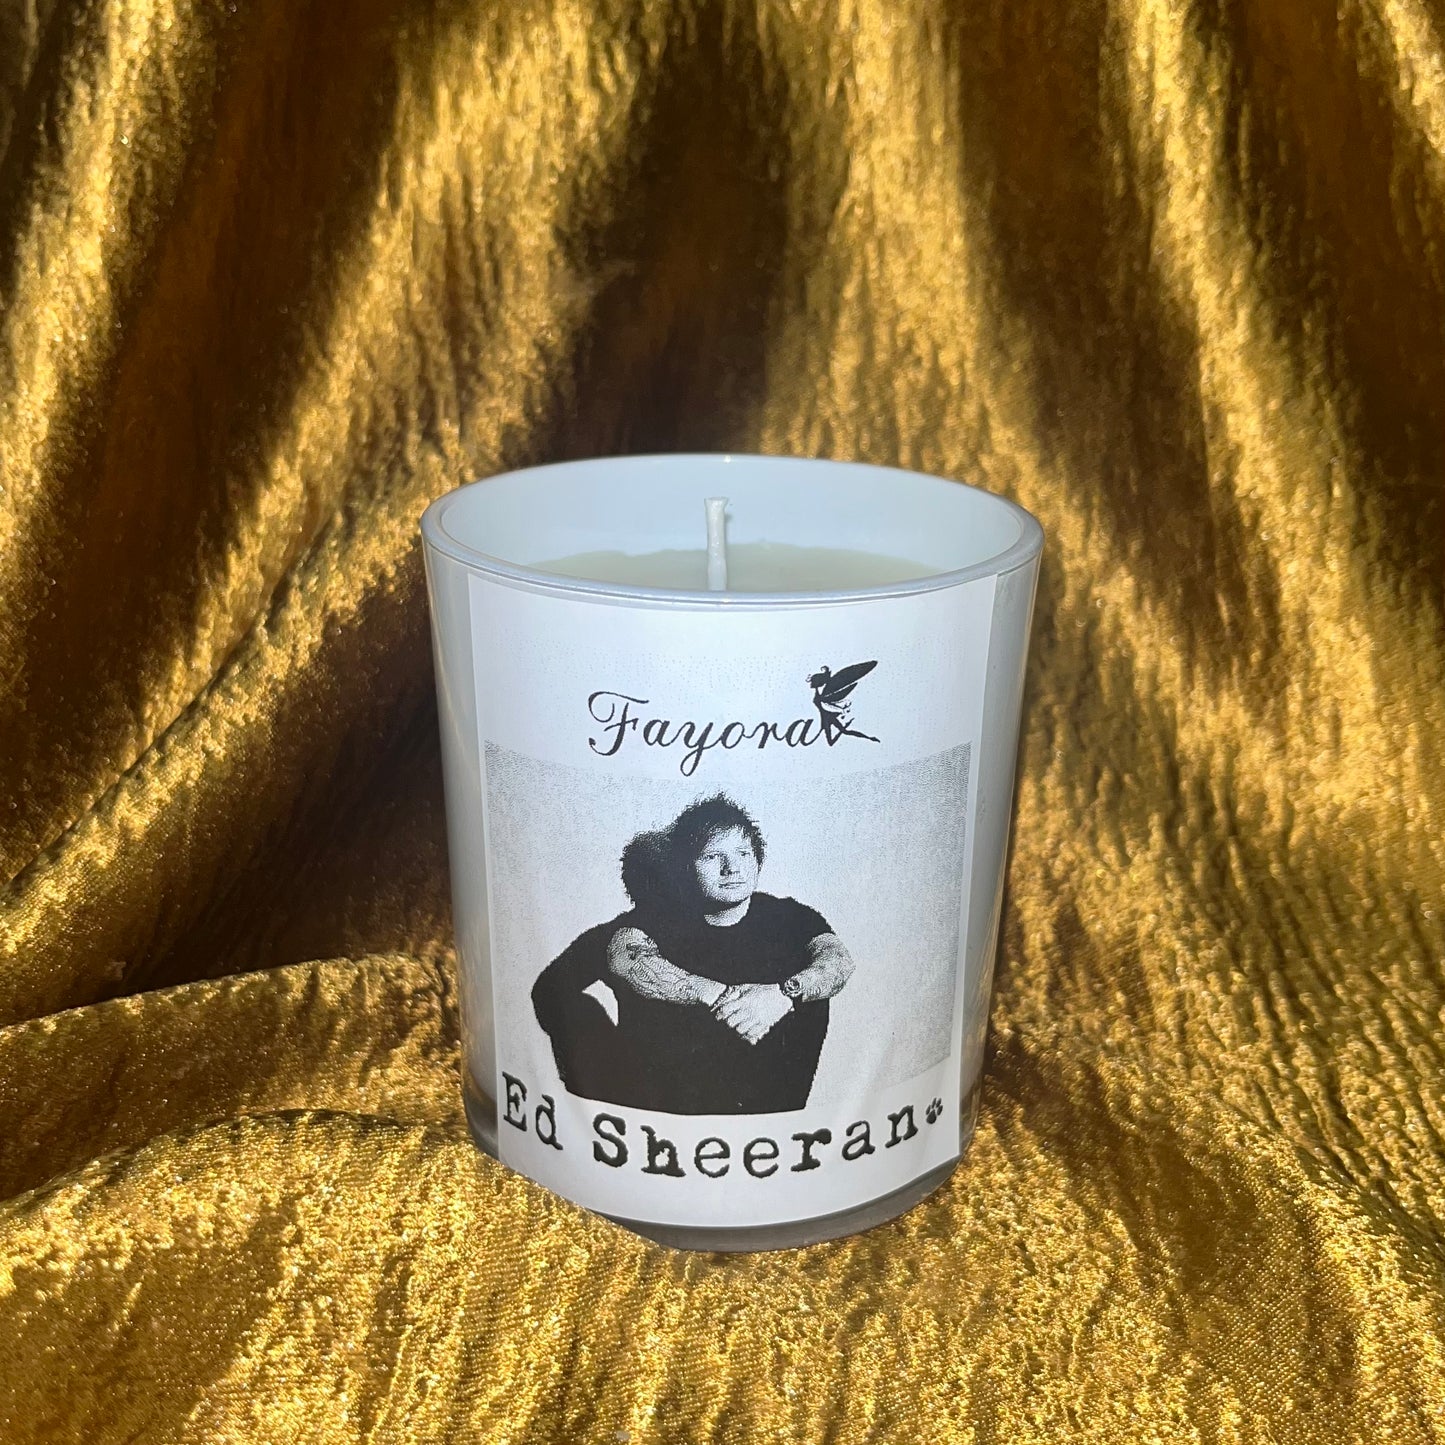 Ed Sheeran Candle